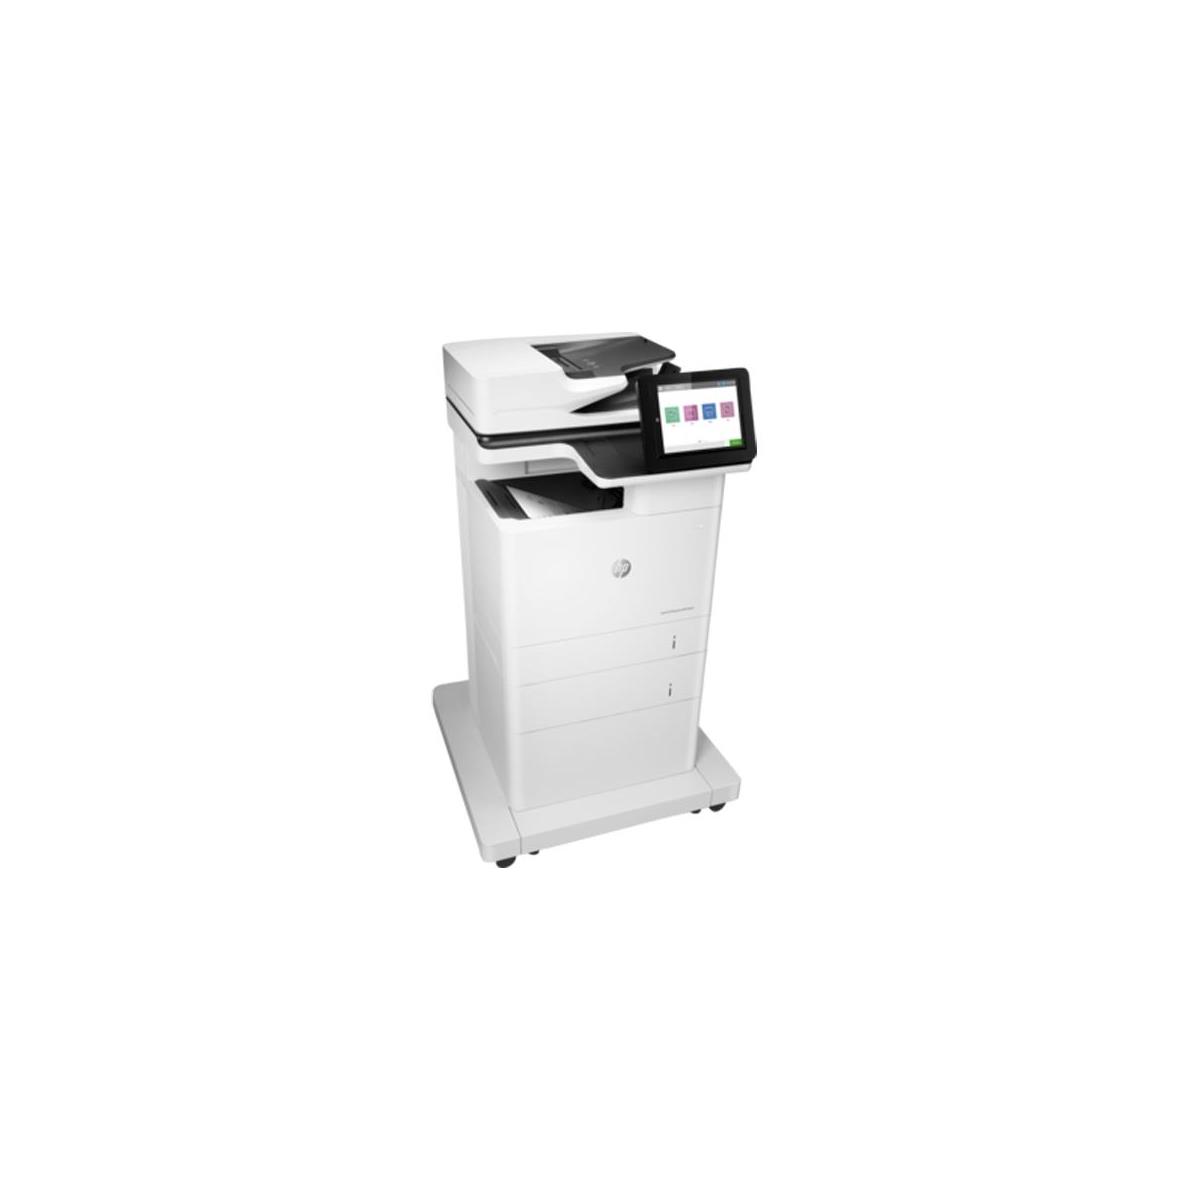 

HP LaserJet Enterprise M632fht Monochrome Multifunction Laser Printer